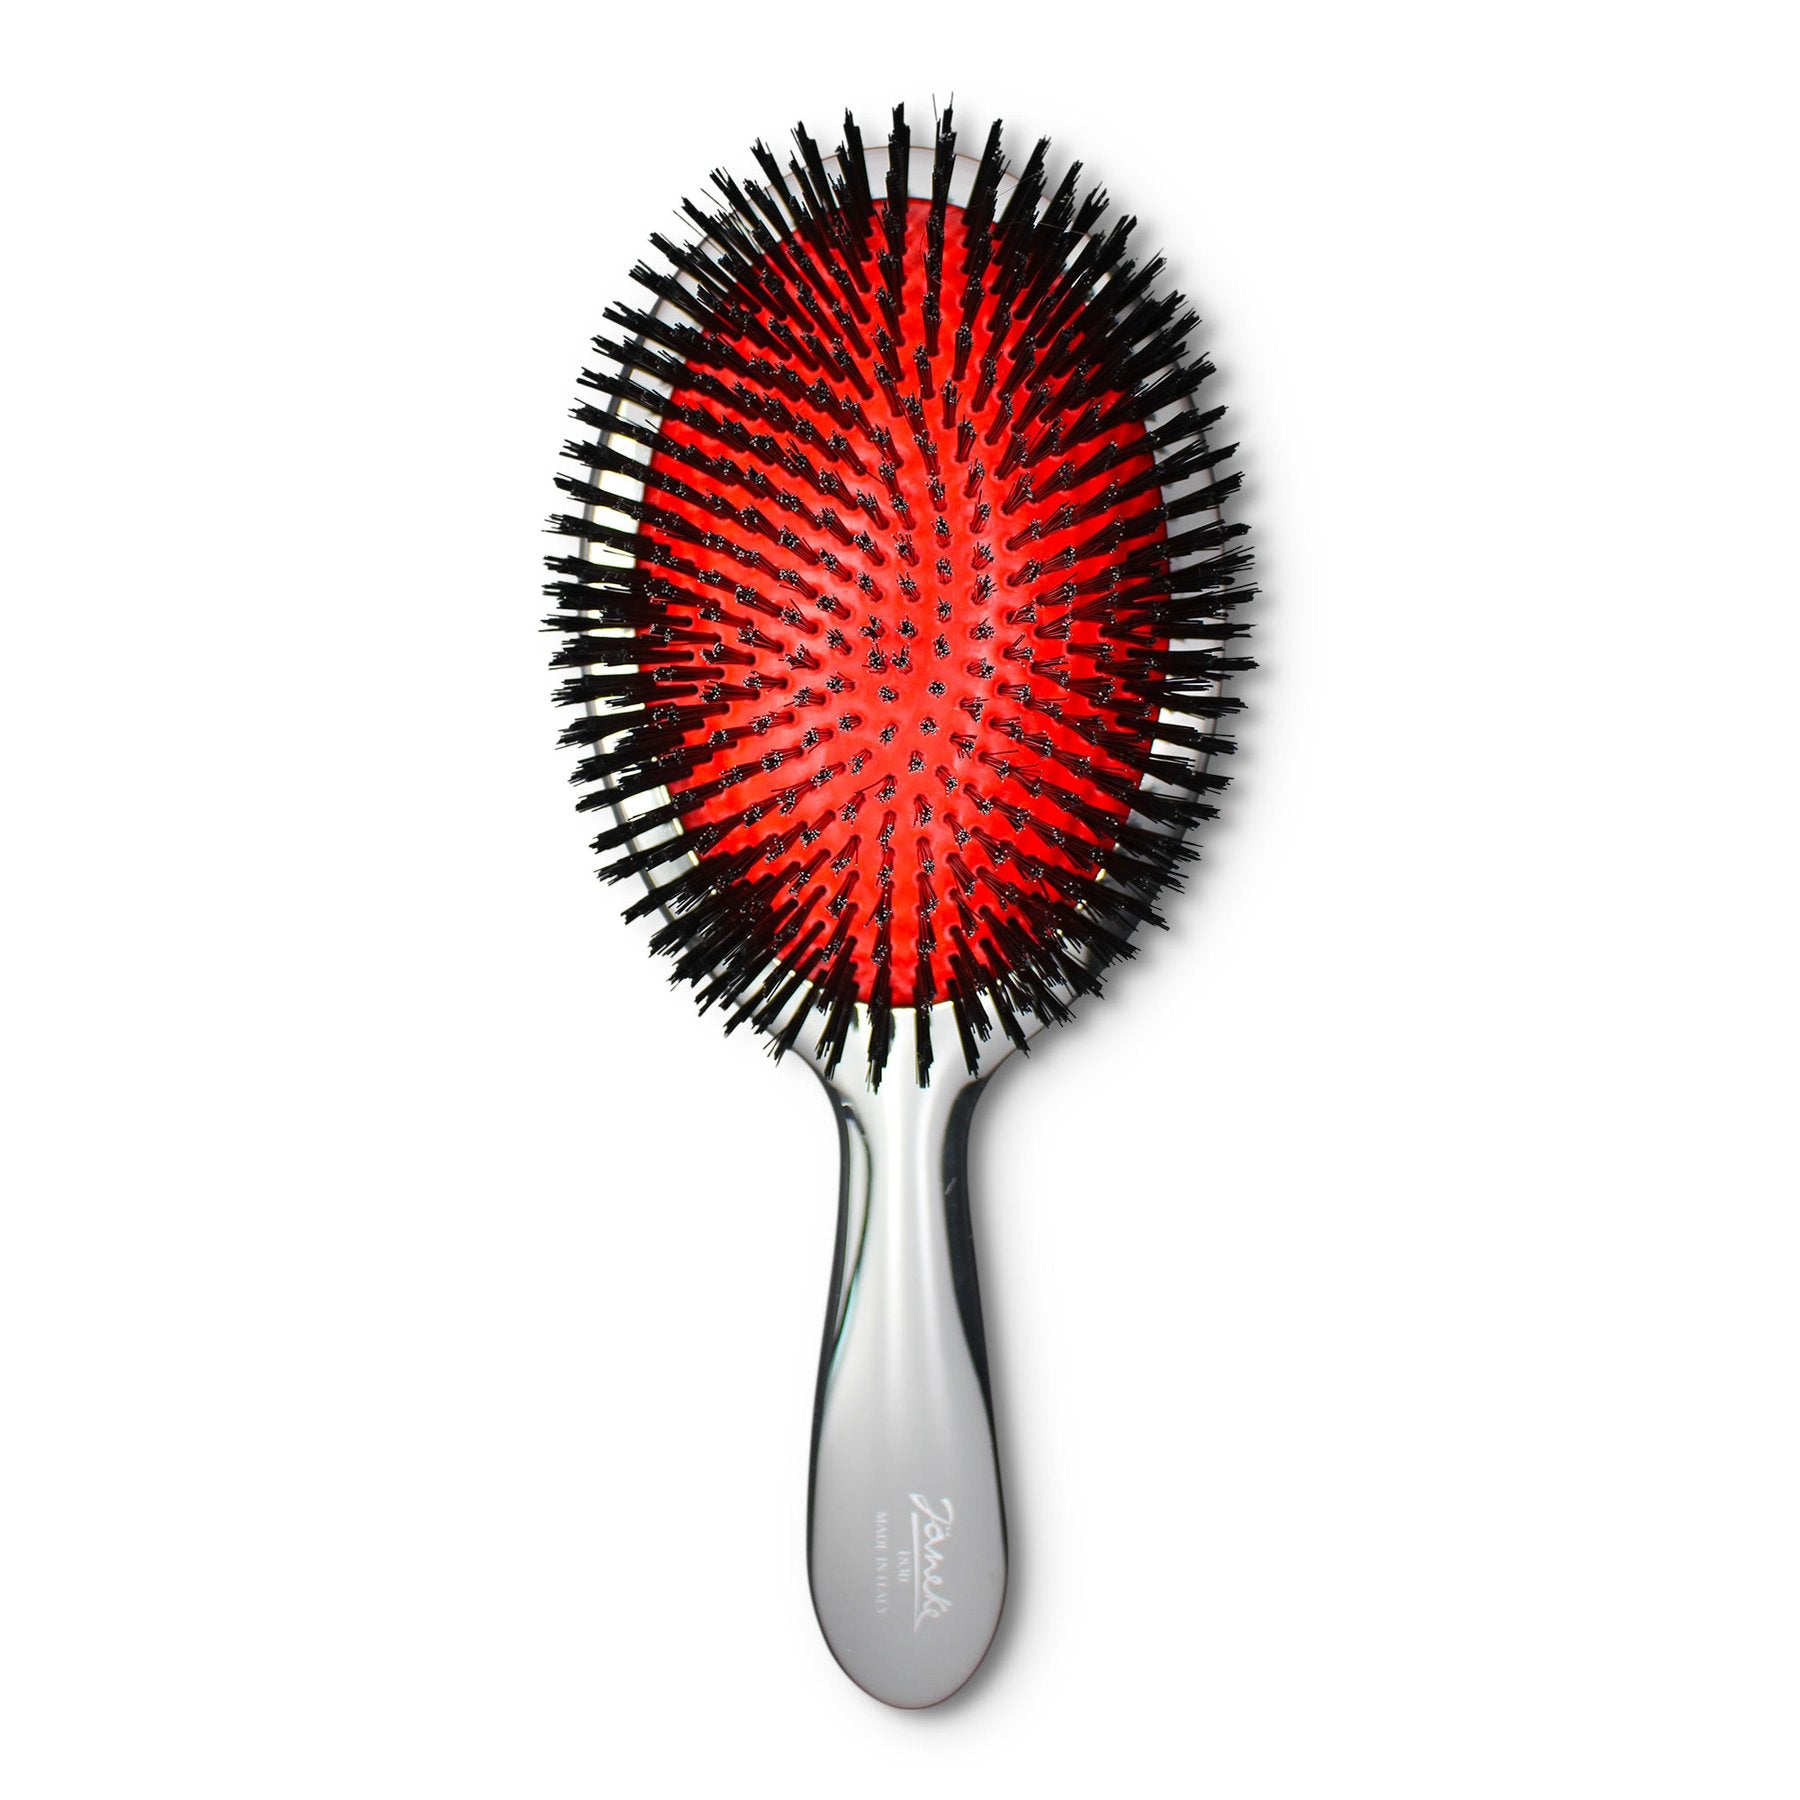 Small Pneumatic Mixed Bristle Hairbrush